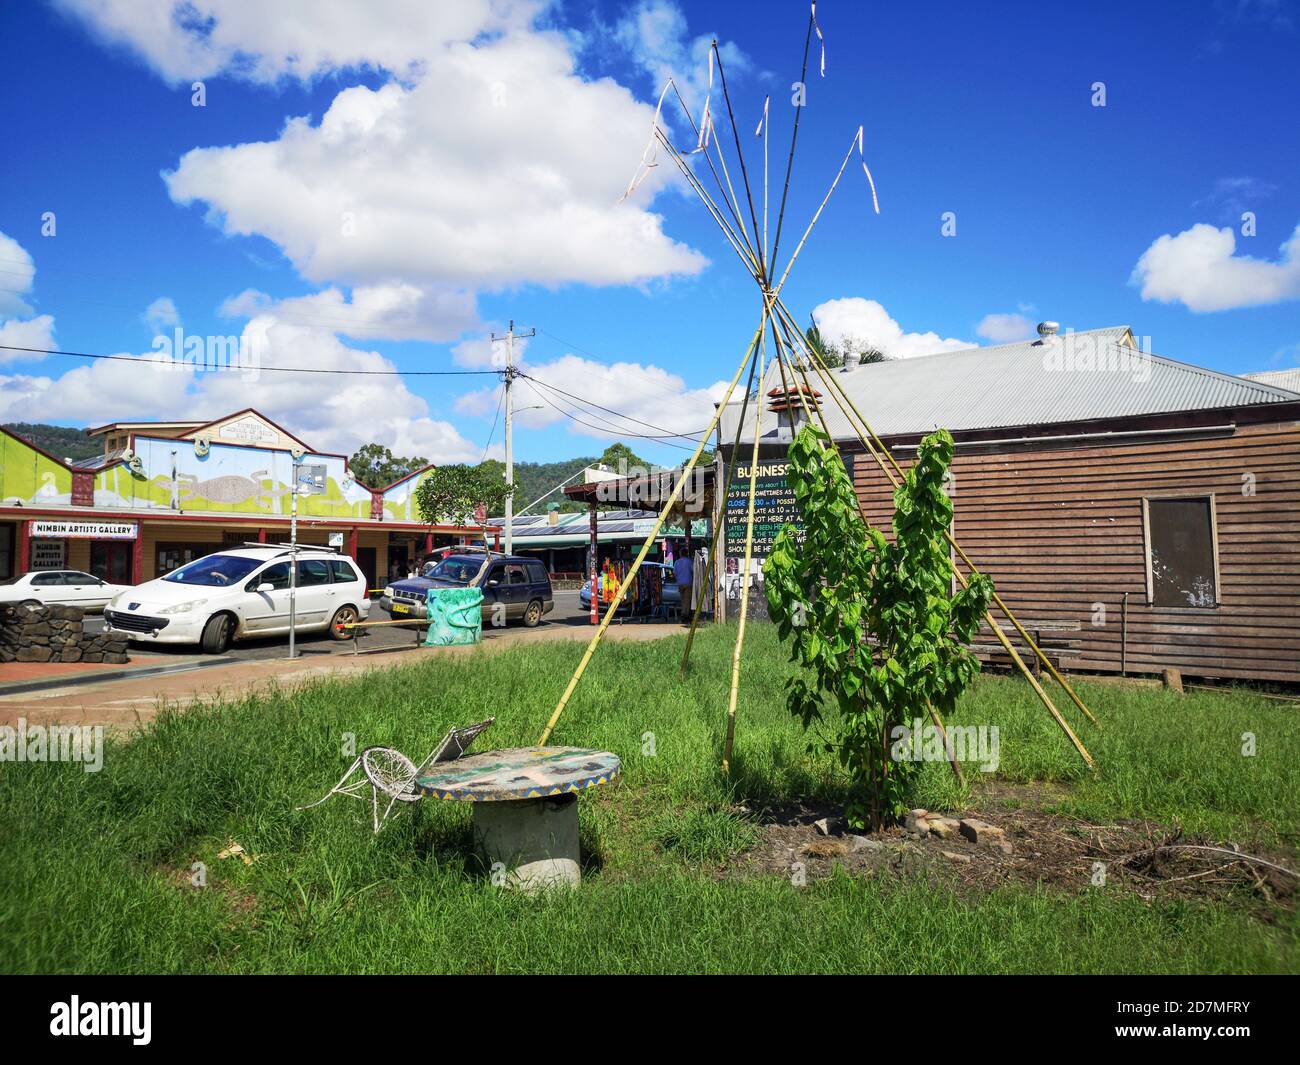 Nimbin, Australia: March 18, 2020: Grassy area in Nimbin - is known the world over as Australia's most famous hippie destination. Stock Photo